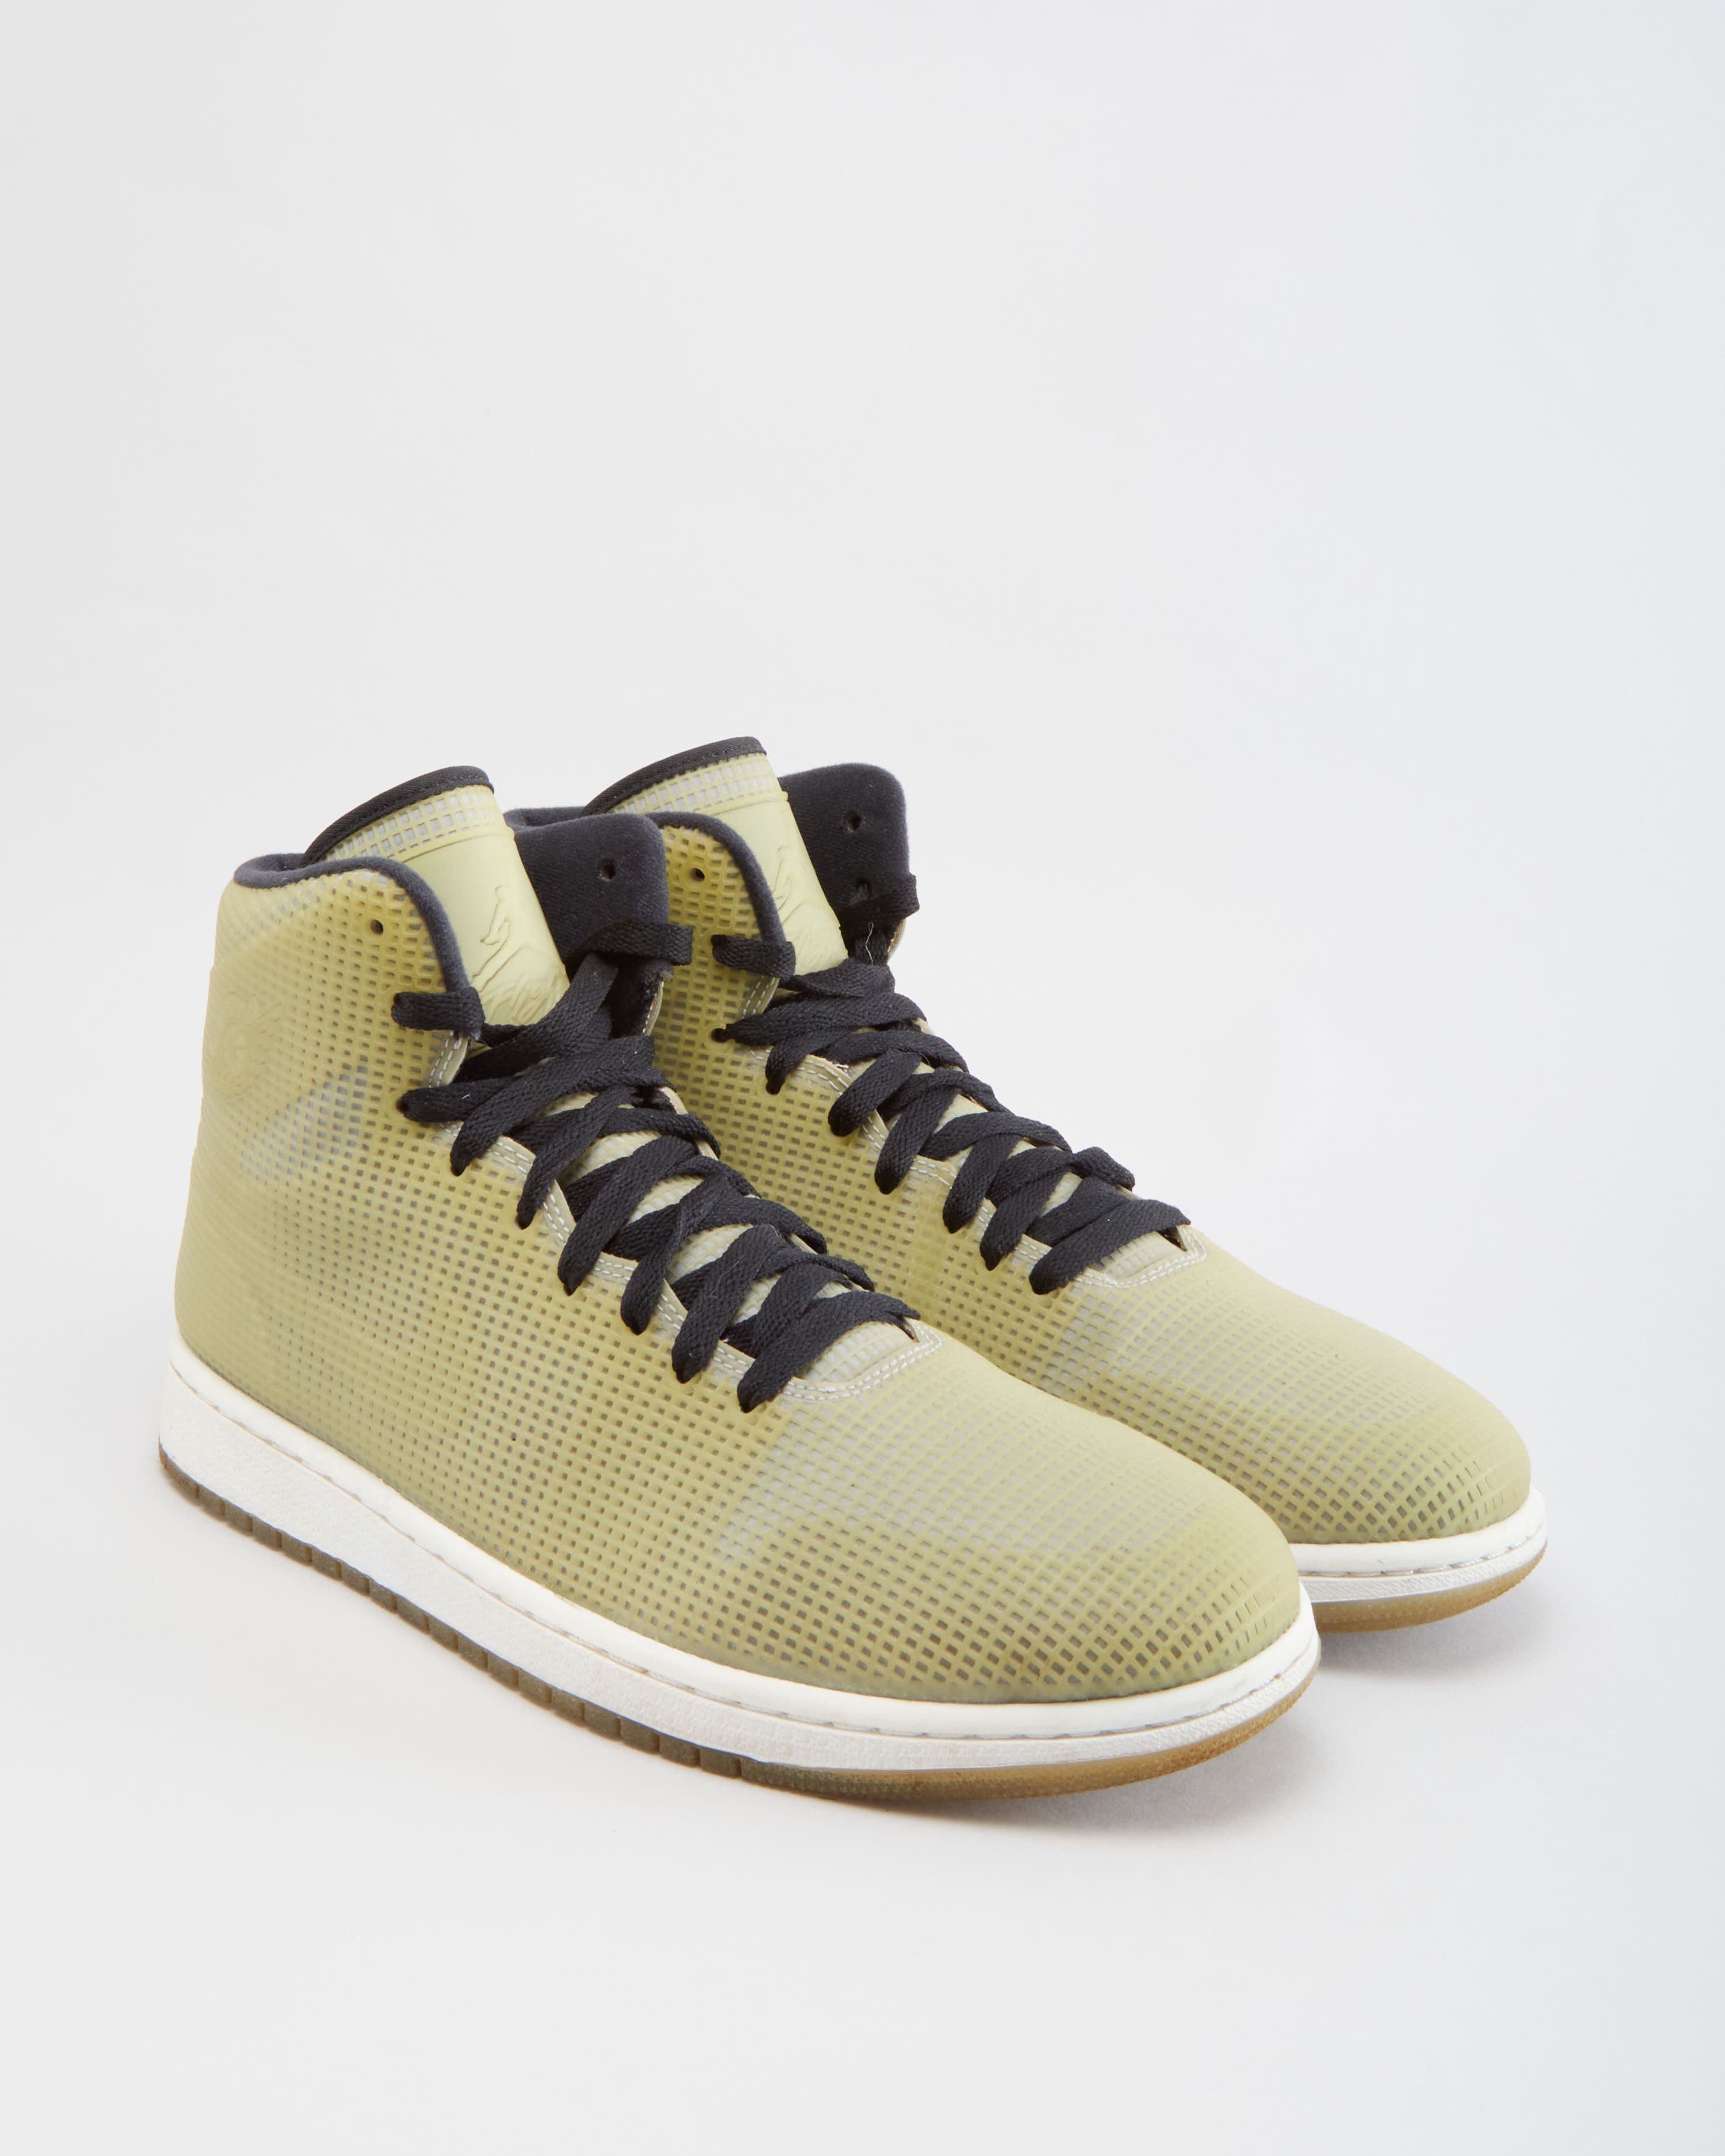 Nike Air Jordan Schuhe 4lab1 Glow reflektierende Trainer – UK 9 – Rokit